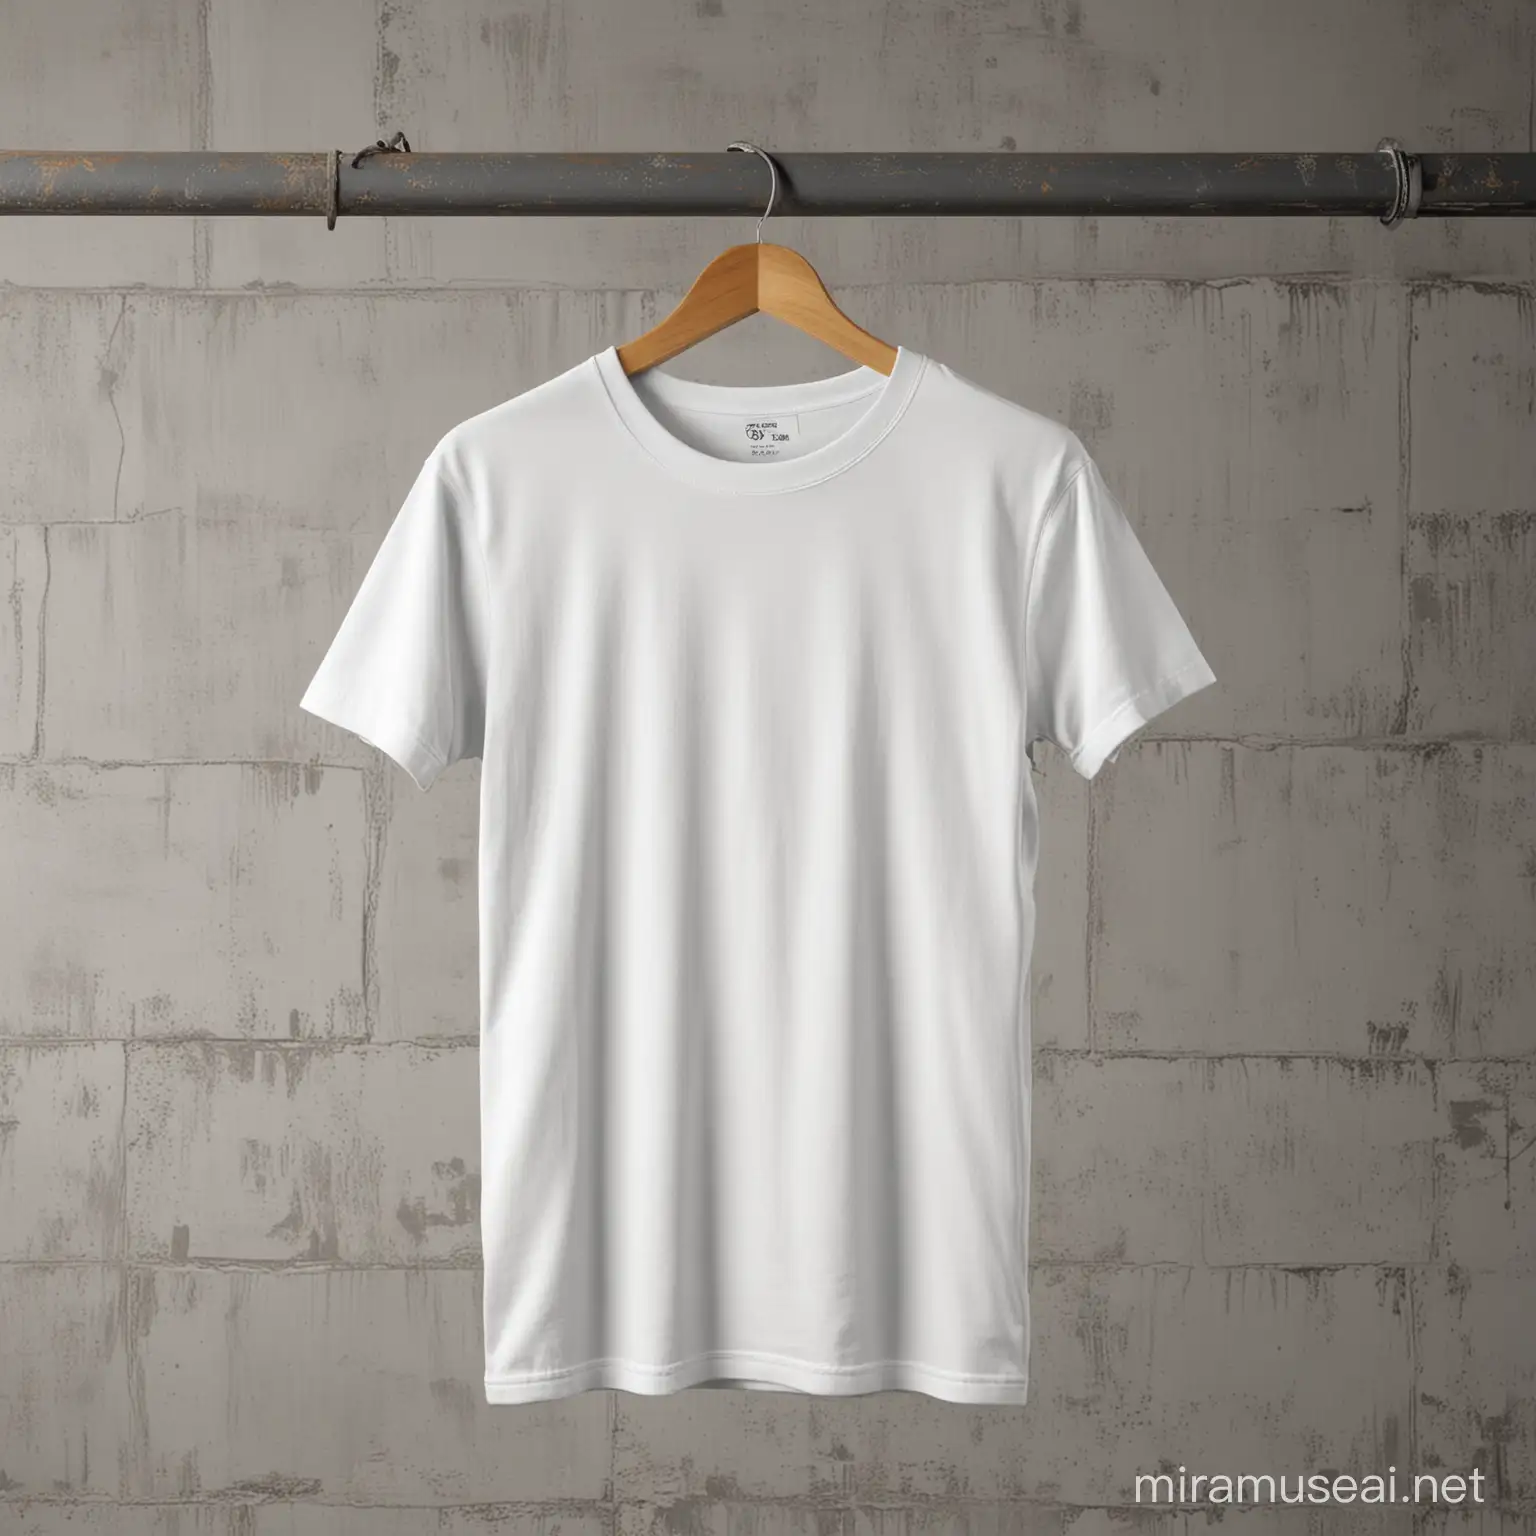 Gildan 64000 white t-shirt mockup, hanging, cement industrial studio background
